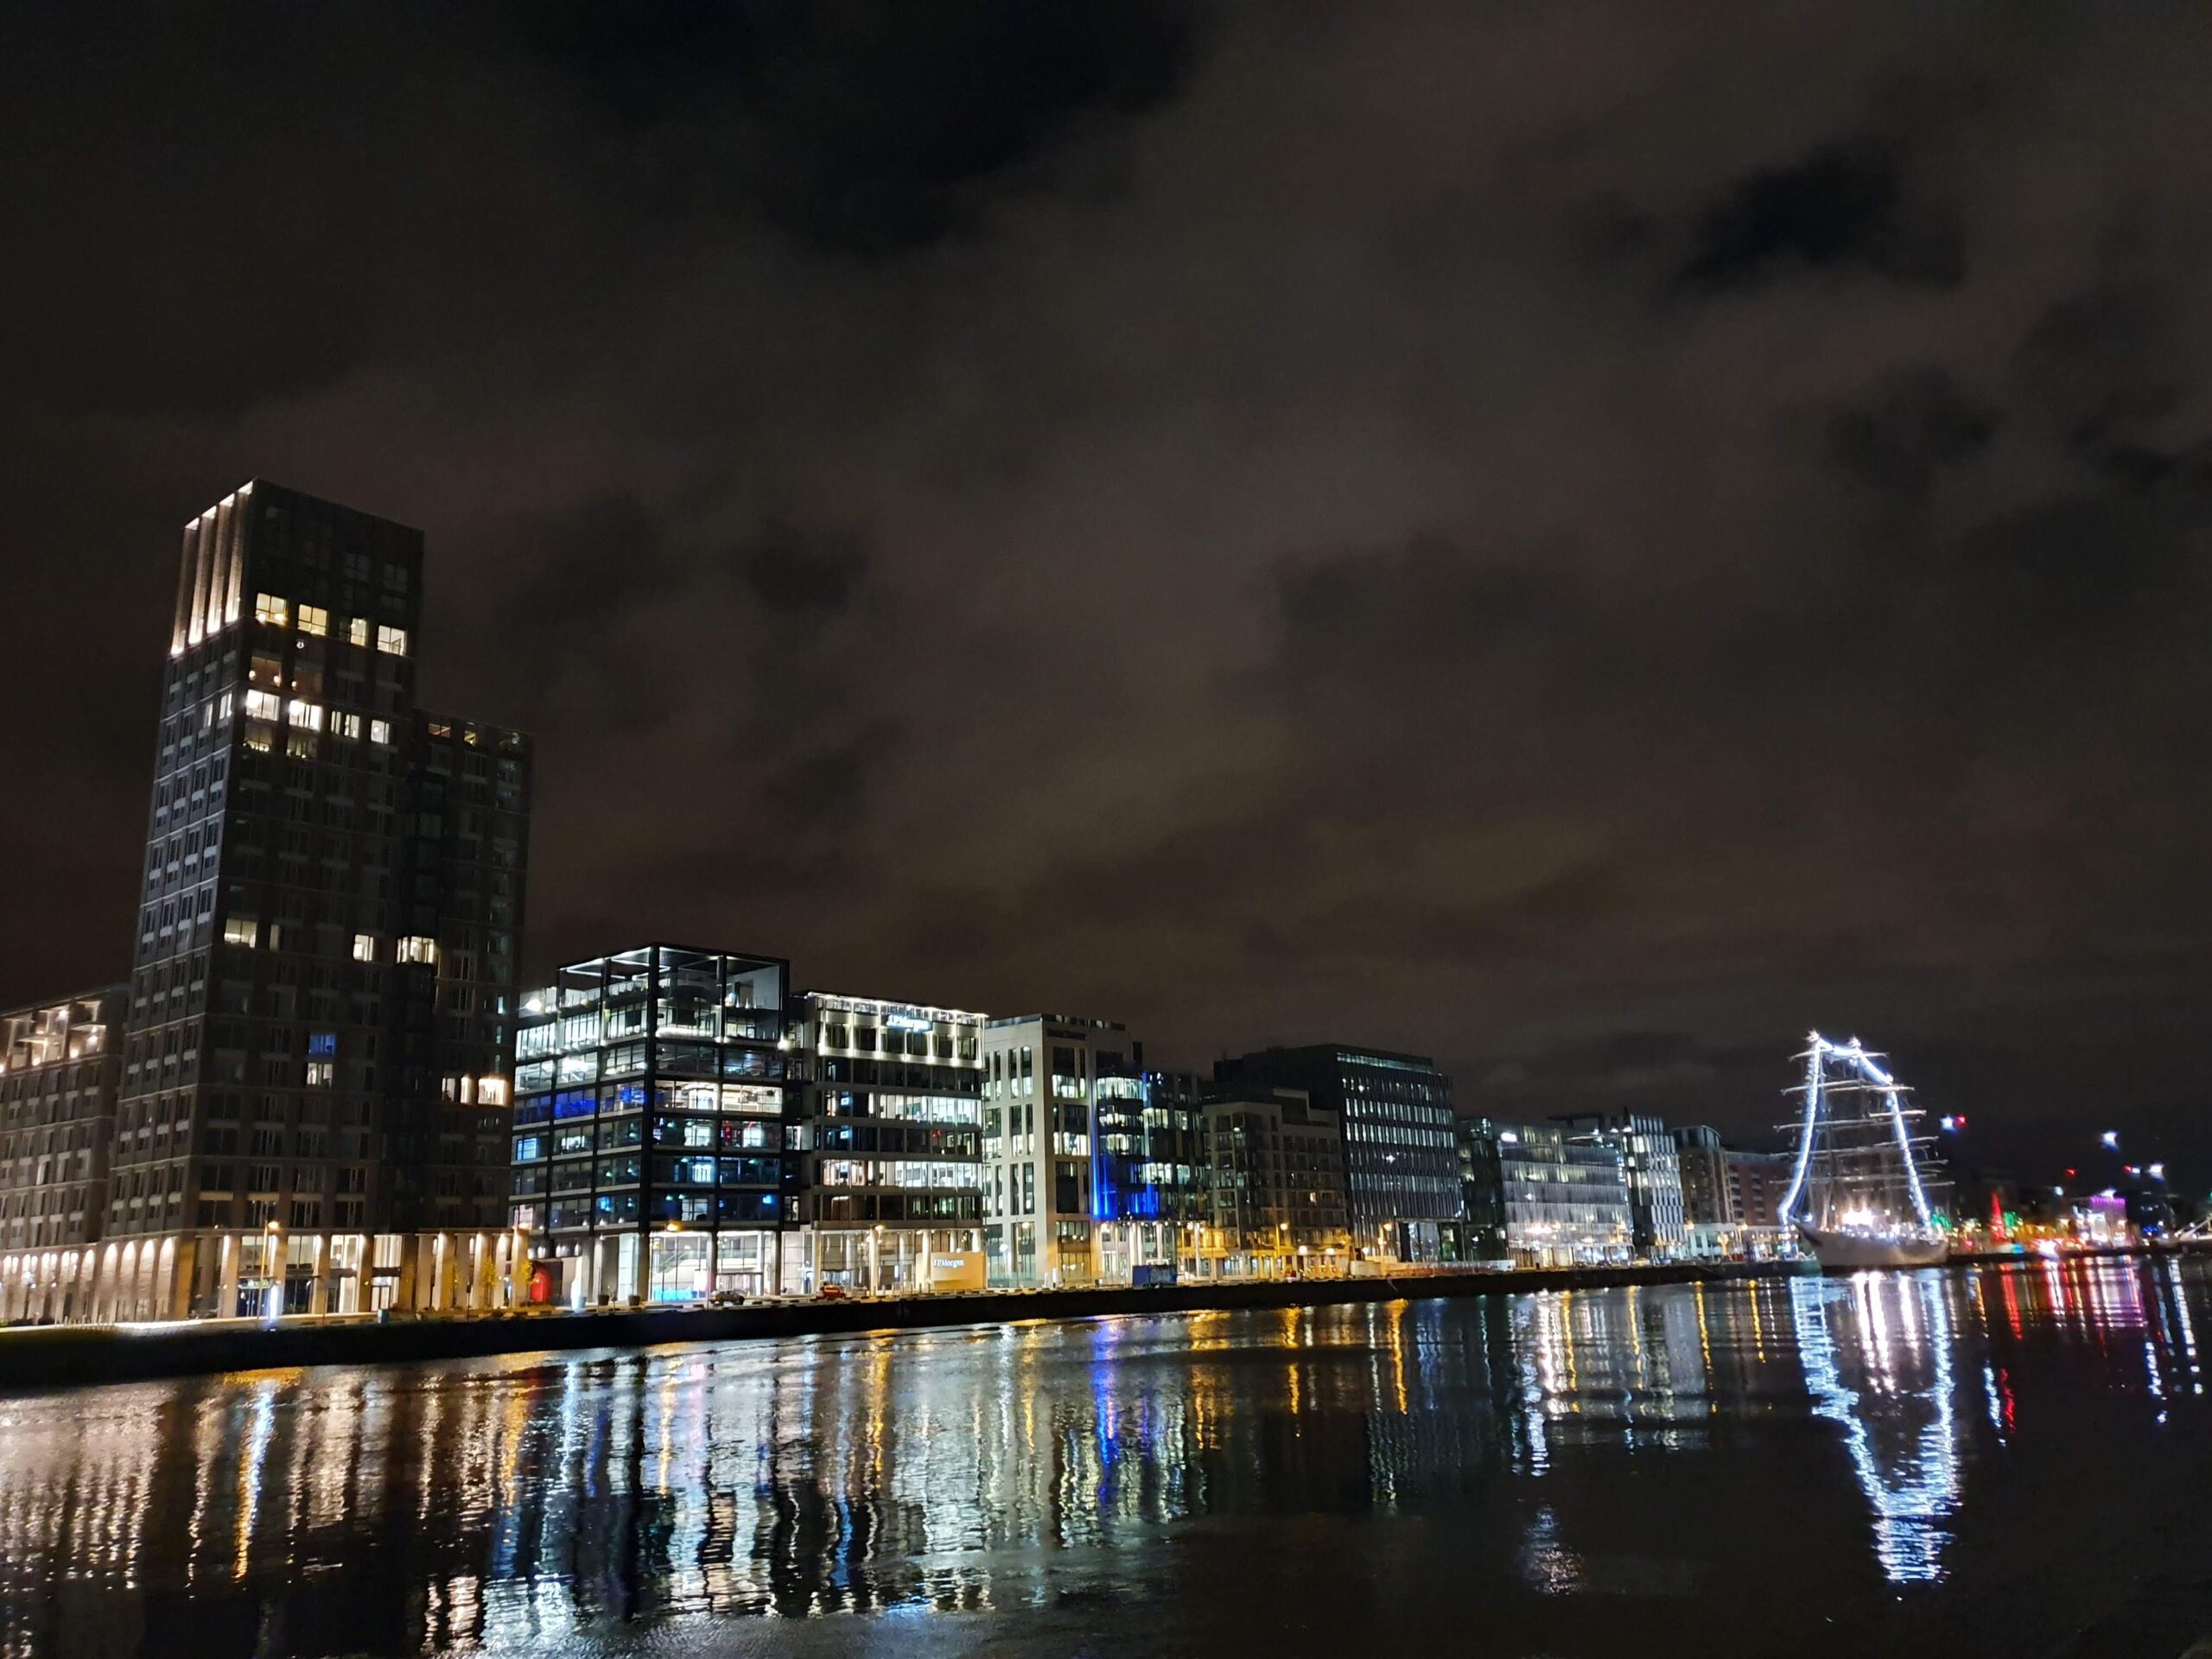 Dublin Docklands: A Modern Hub of Culture, Innovation, and Development